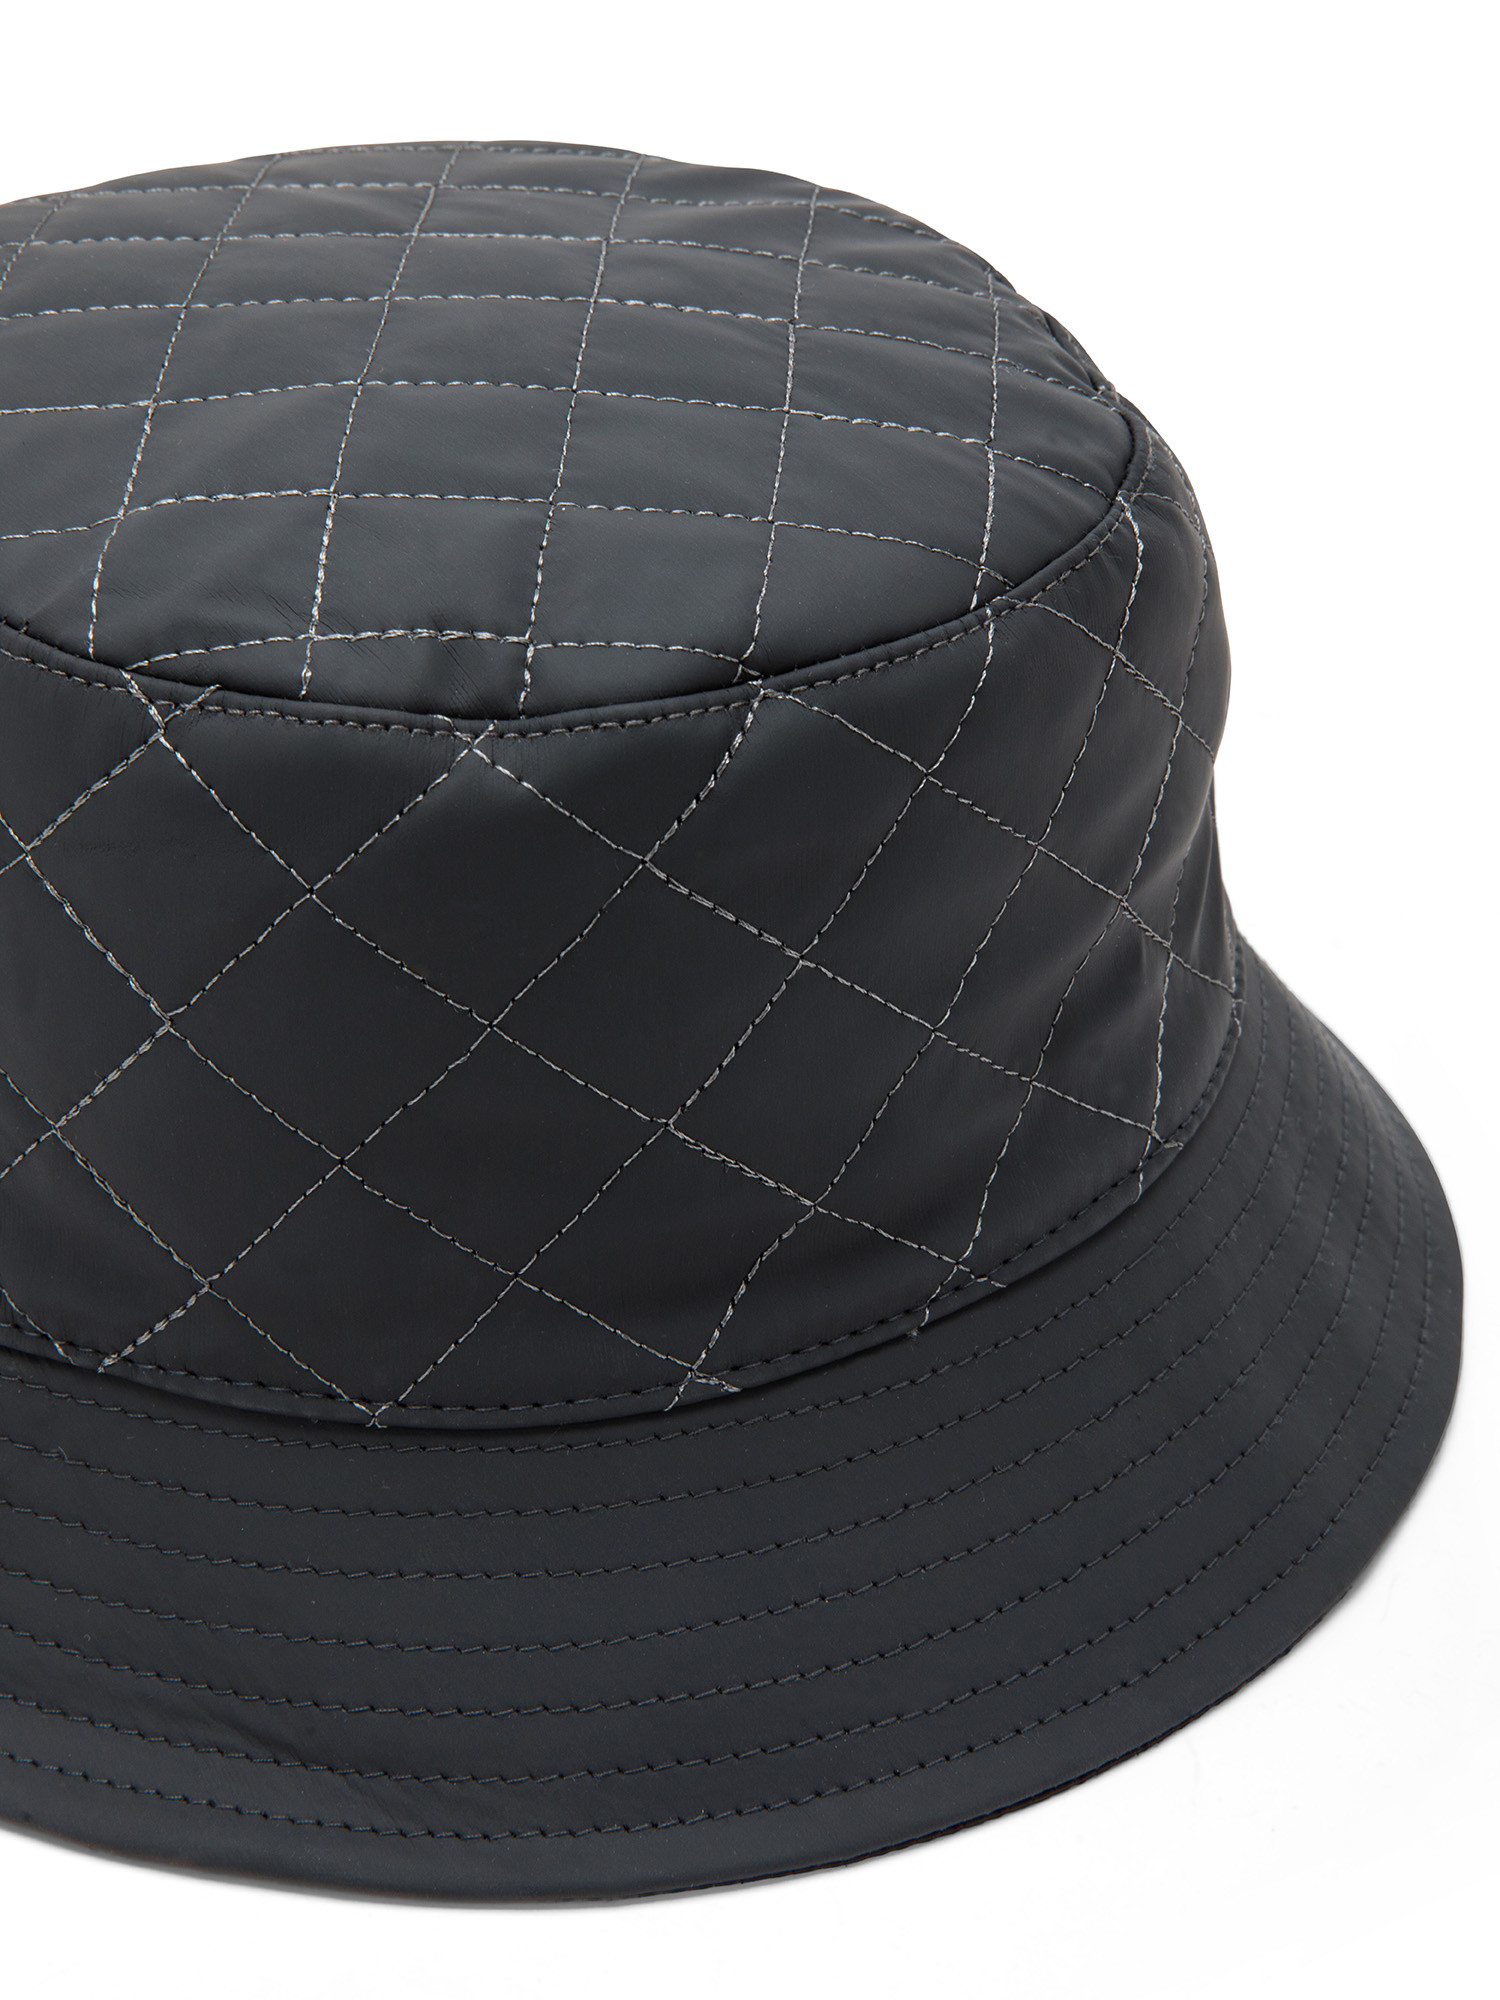 Koan - Quilted fisherman hat, Grey, large image number 1